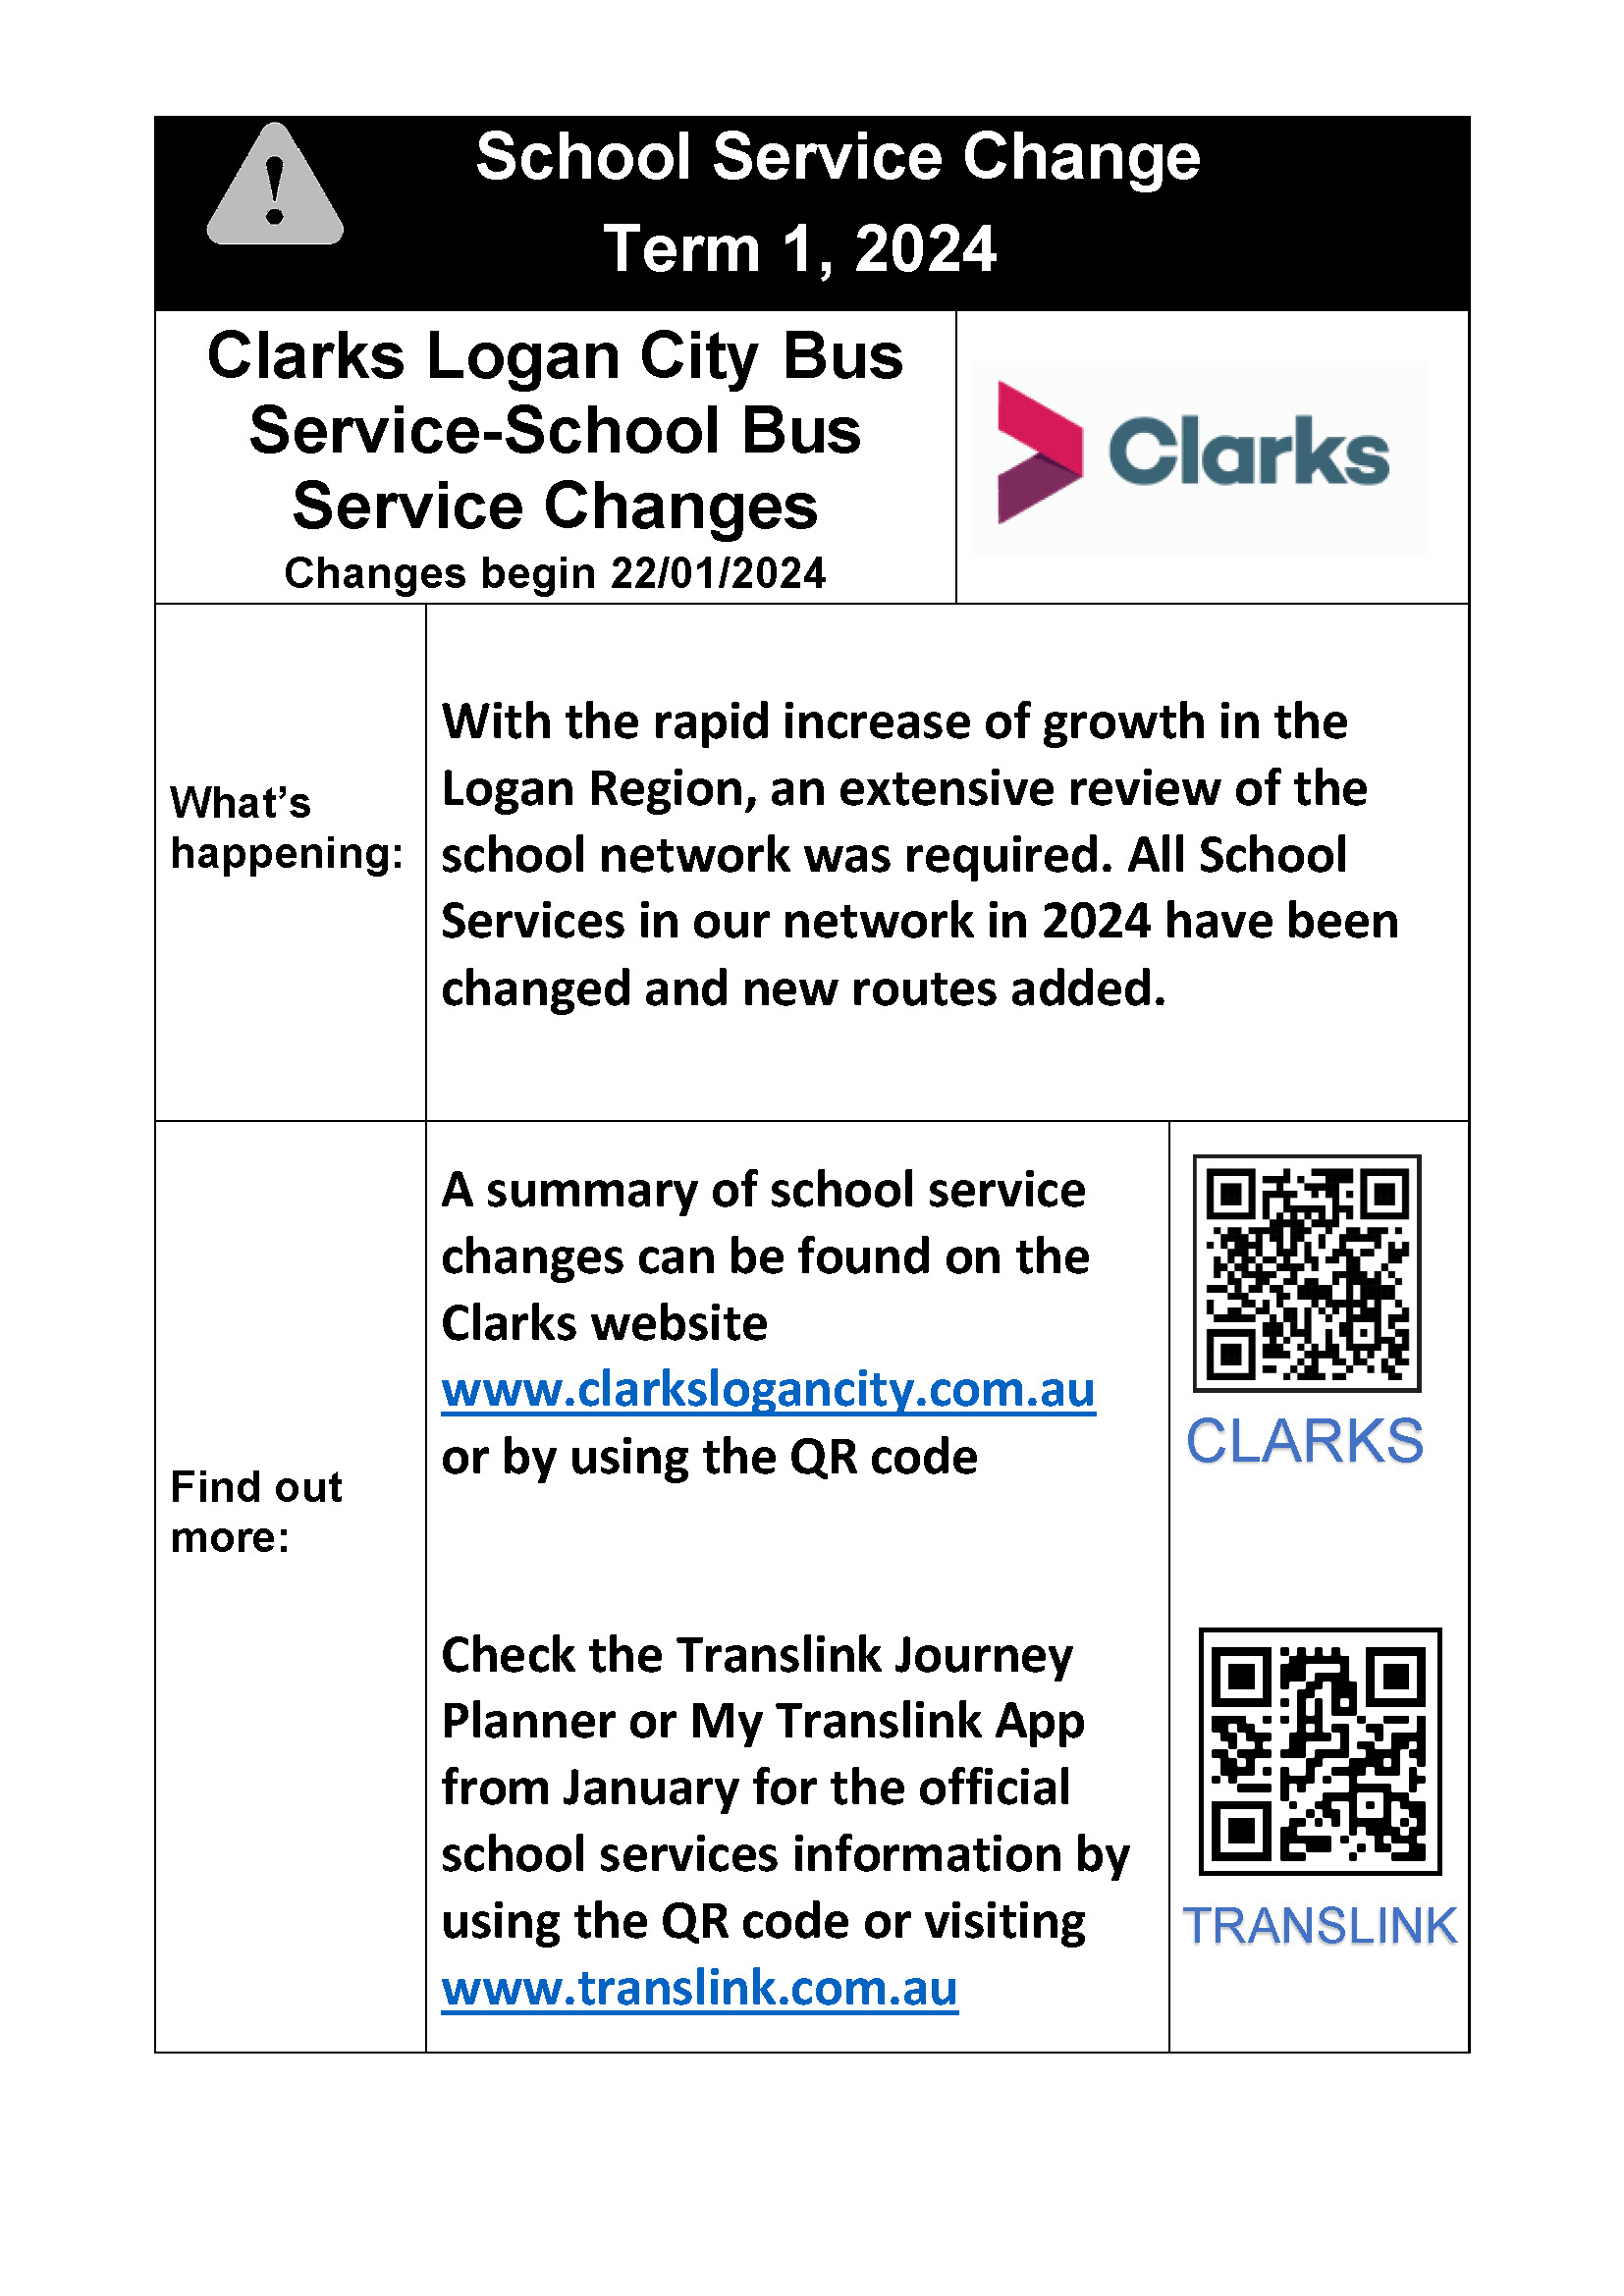 Clarks Logan City Bus Service - School Service changes commencing Term 1 2024.jpg